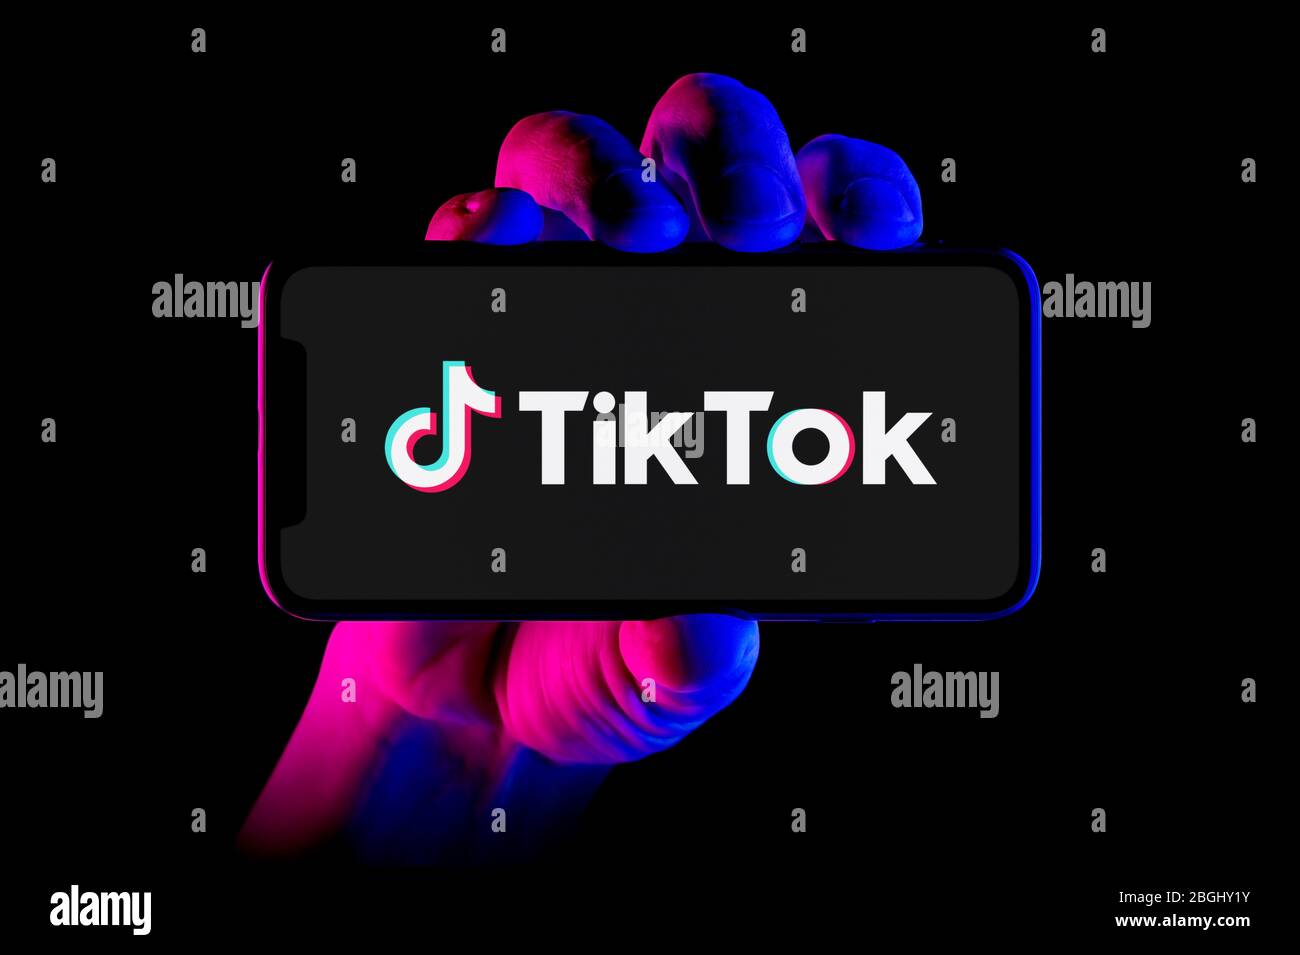 tiktok logo 2020 hi-res stock photography and images - Alamy